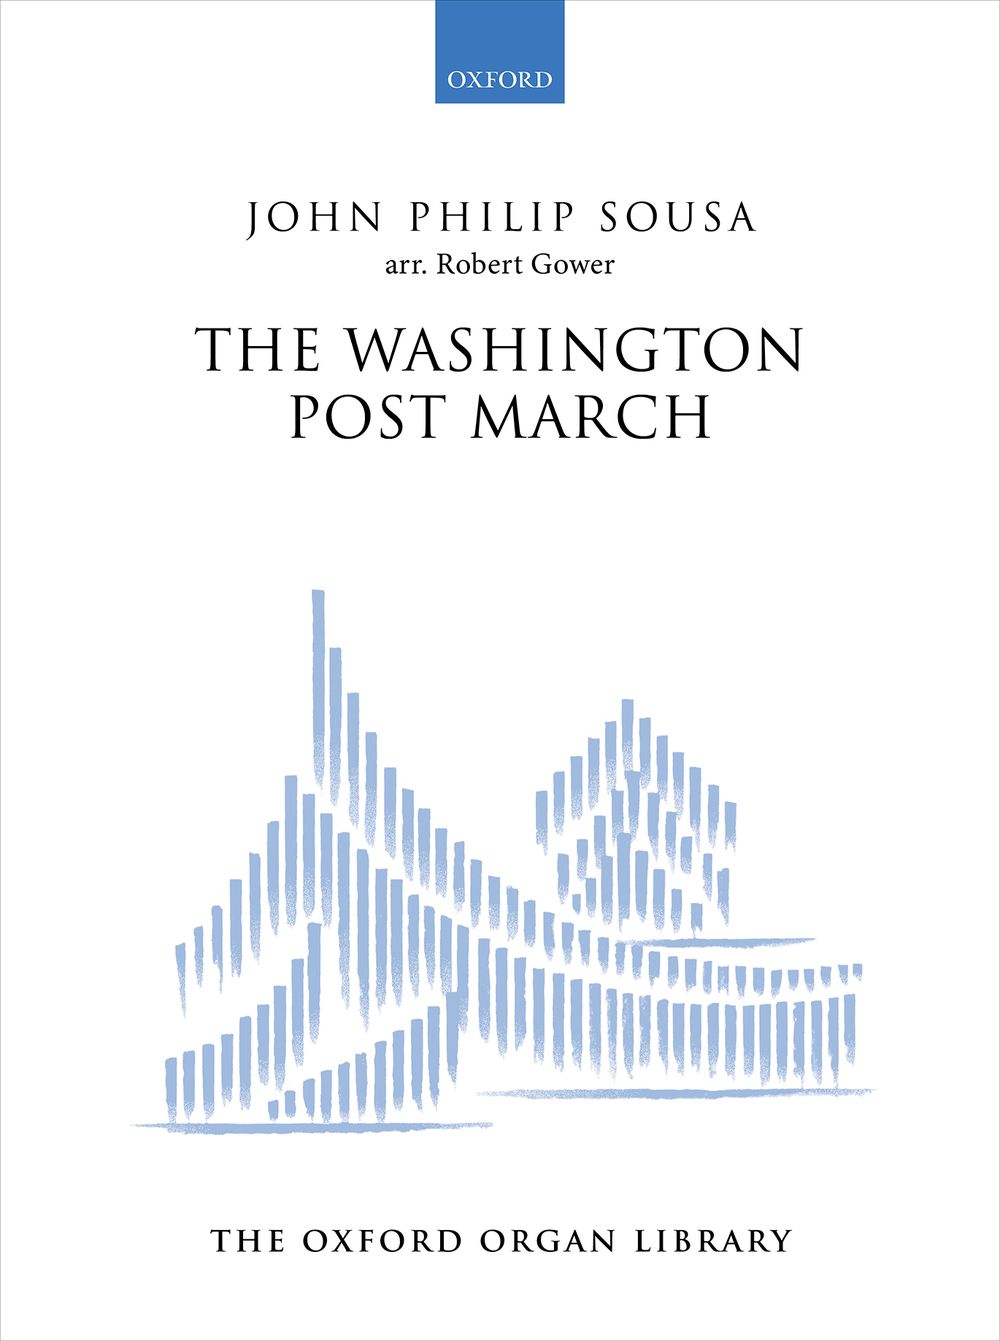 The Washington Post March: Organ: Instrumental Work